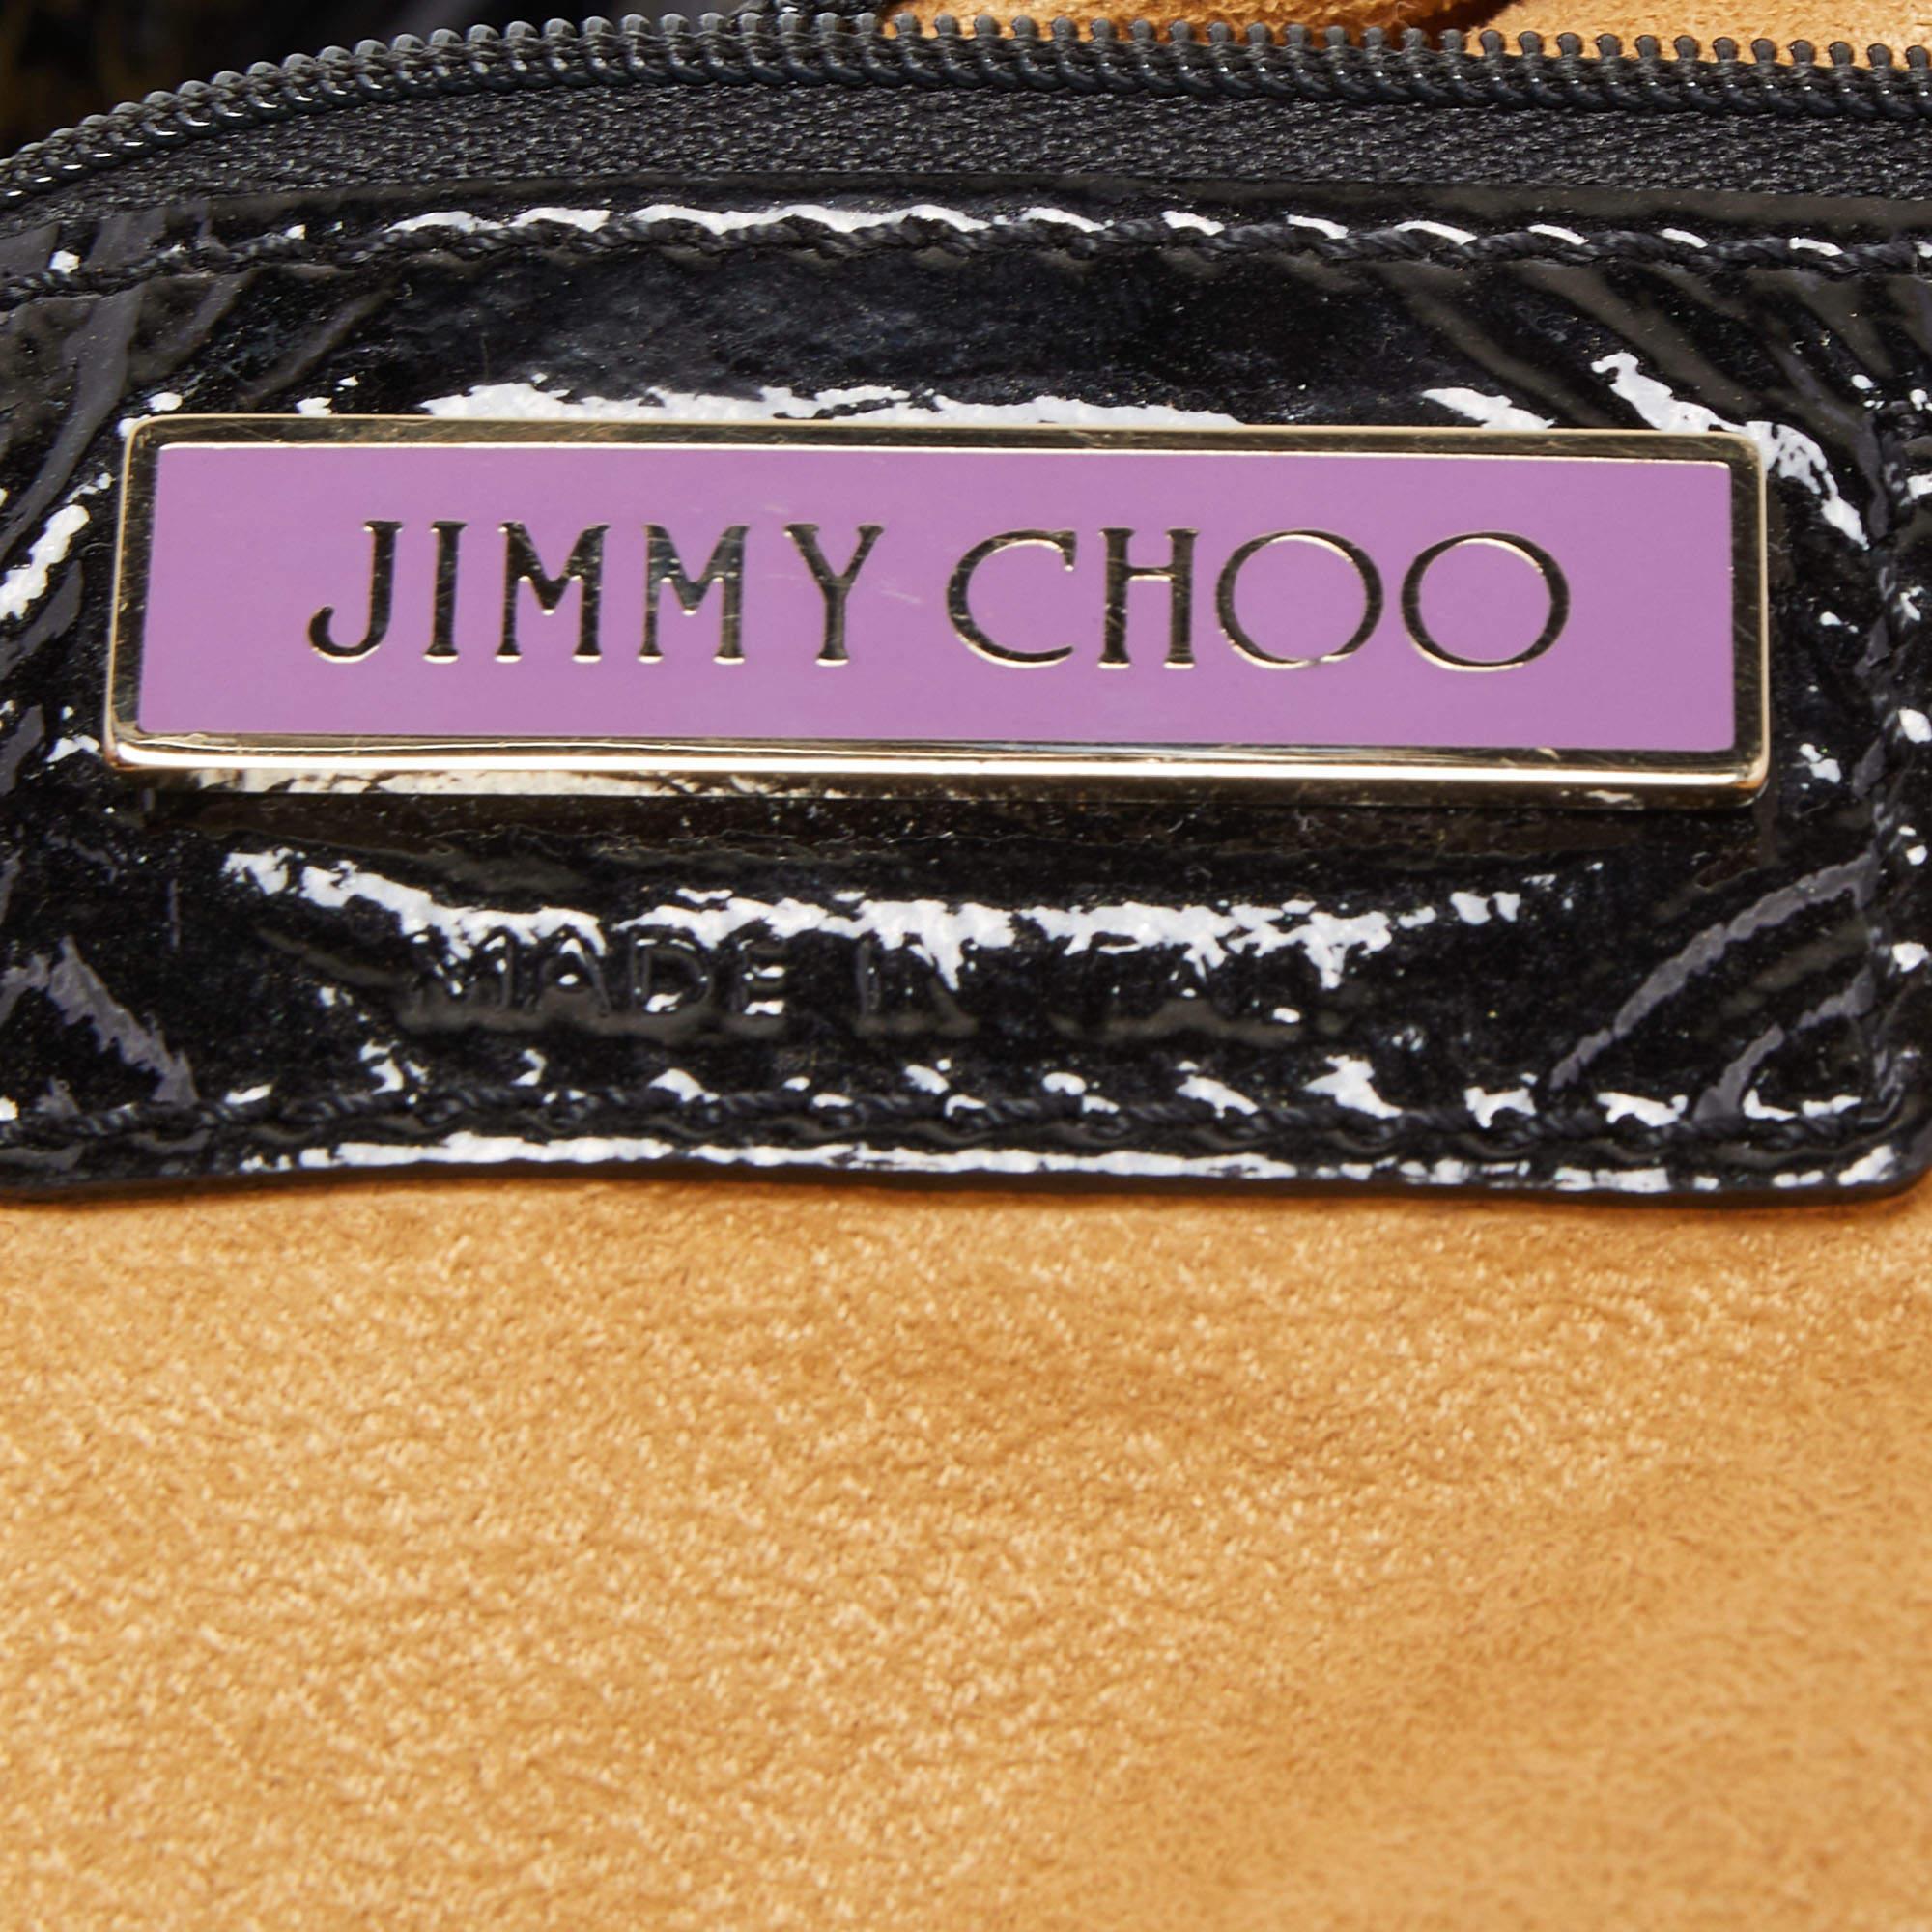 Jimmy Choo Black Patent Leather Lola Hobo 2